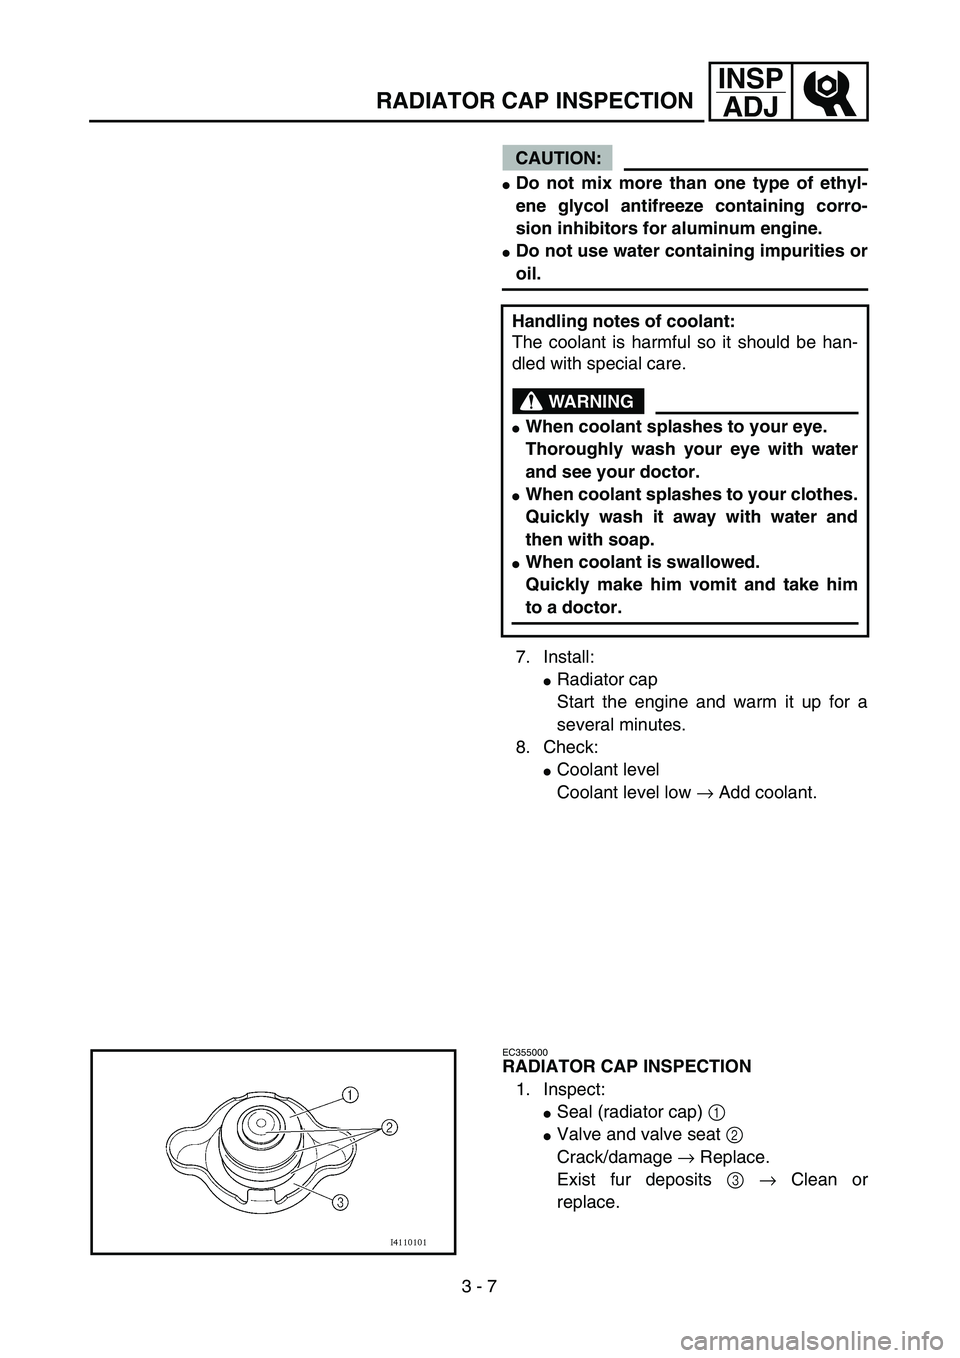 YAMAHA YZ250F 2004  Owners Manual 3 - 7
INSP
ADJ
RADIATOR CAP INSPECTION
CAUTION:
Do not mix more than one type of ethyl-
ene glycol antifreeze containing corro-
sion inhibitors for aluminum engine.
Do not use water containing impur